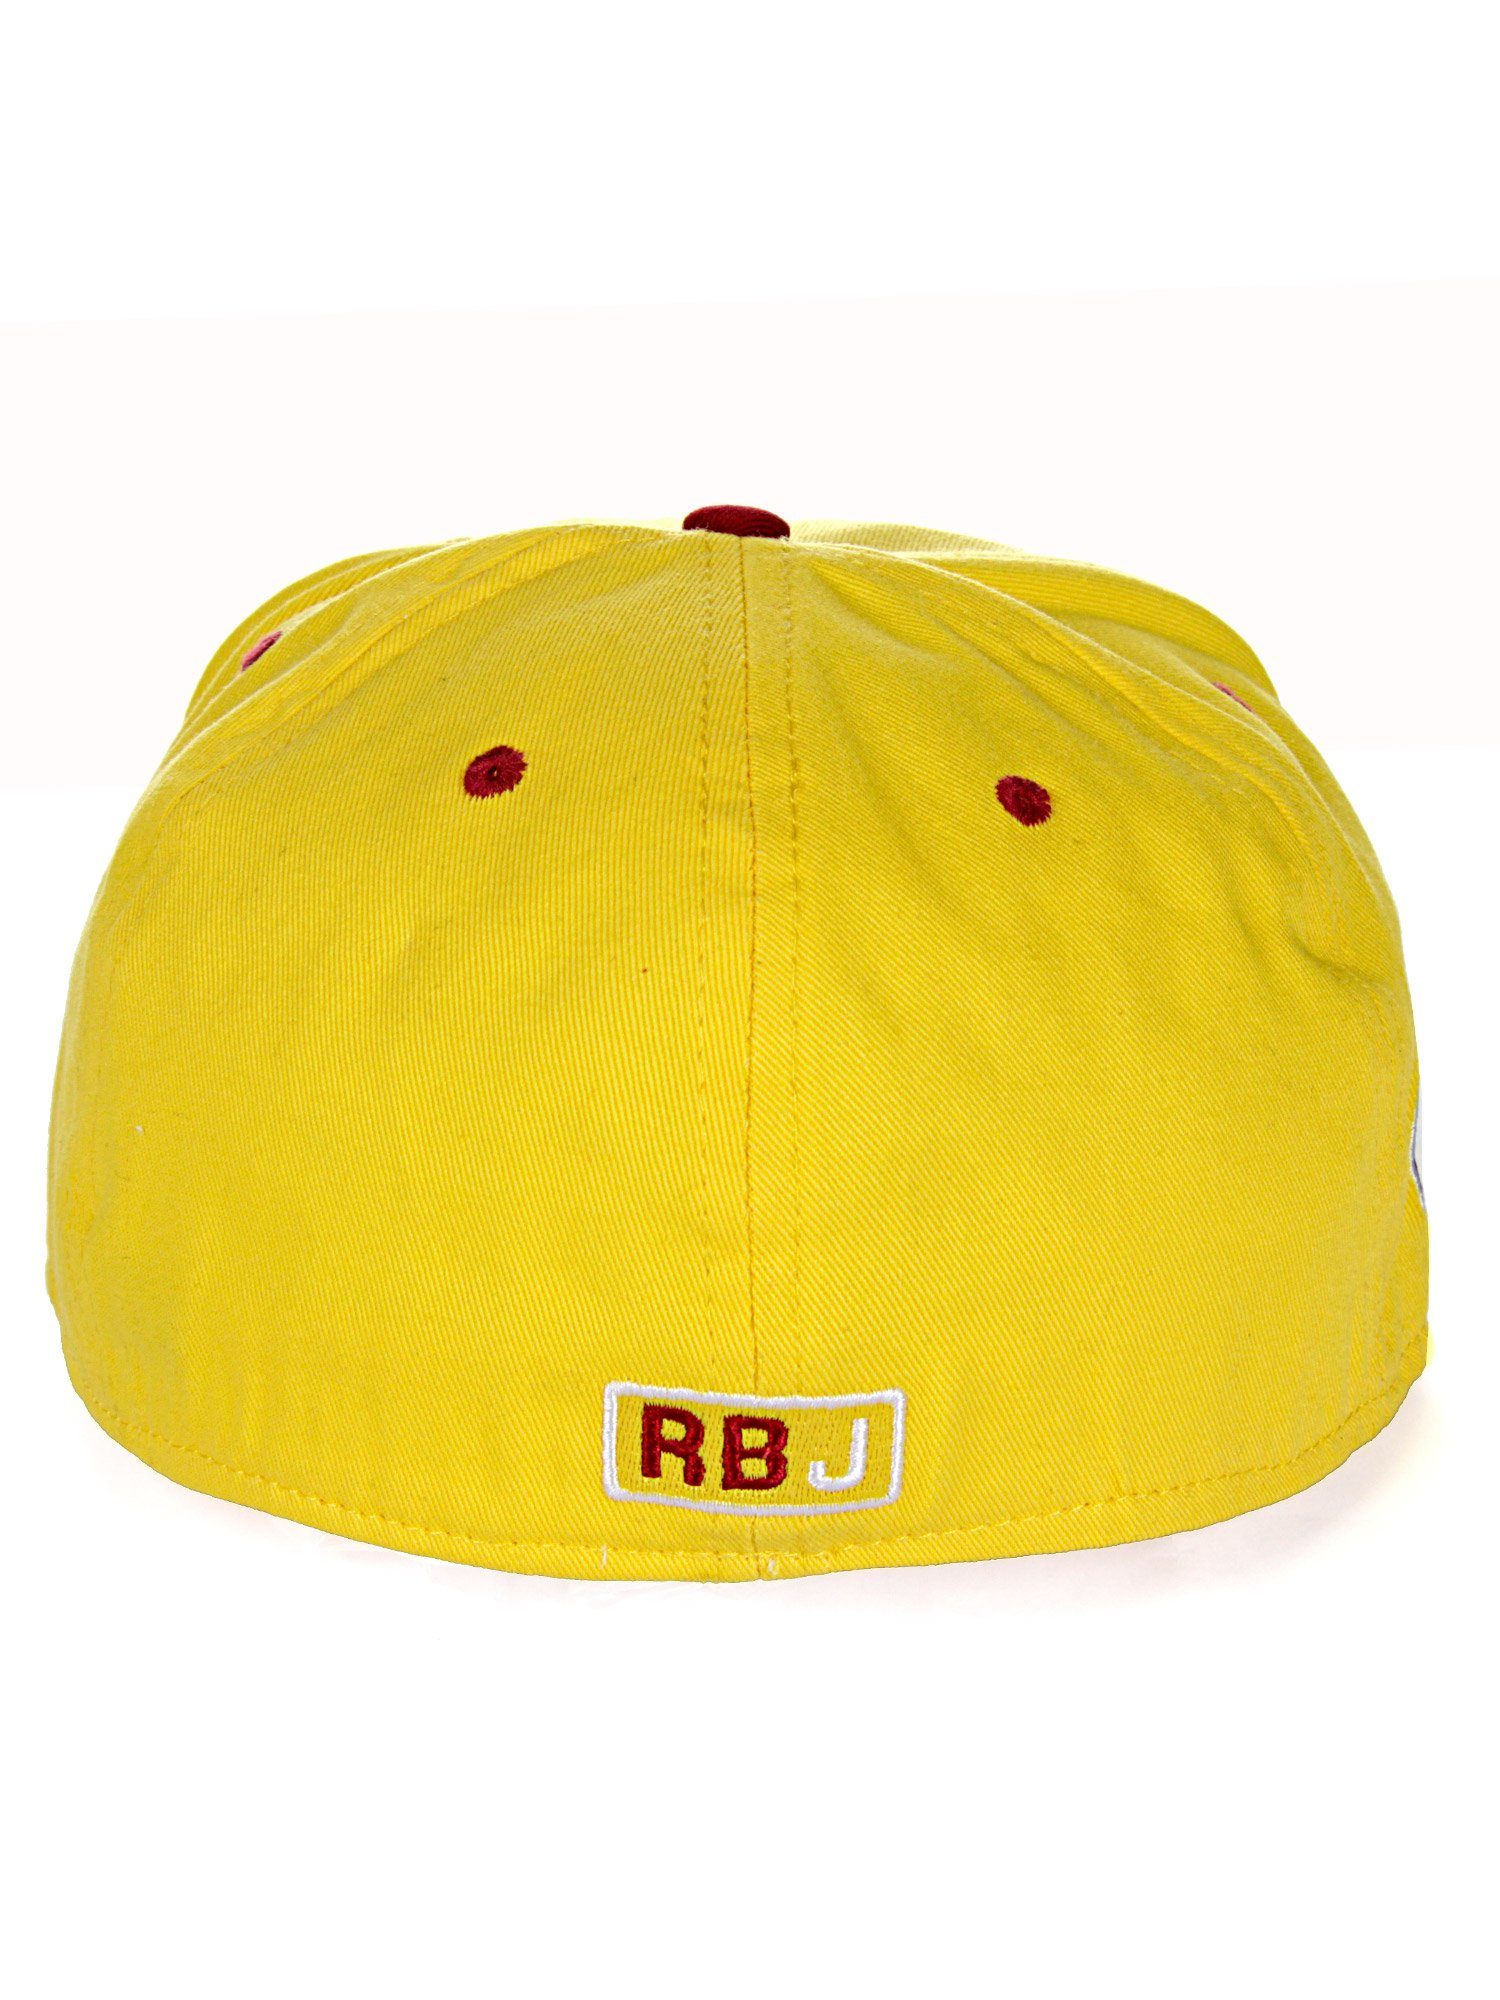 RedBridge mit kontrastfarbigem Baseball Durham Schirm gelb-rot Cap